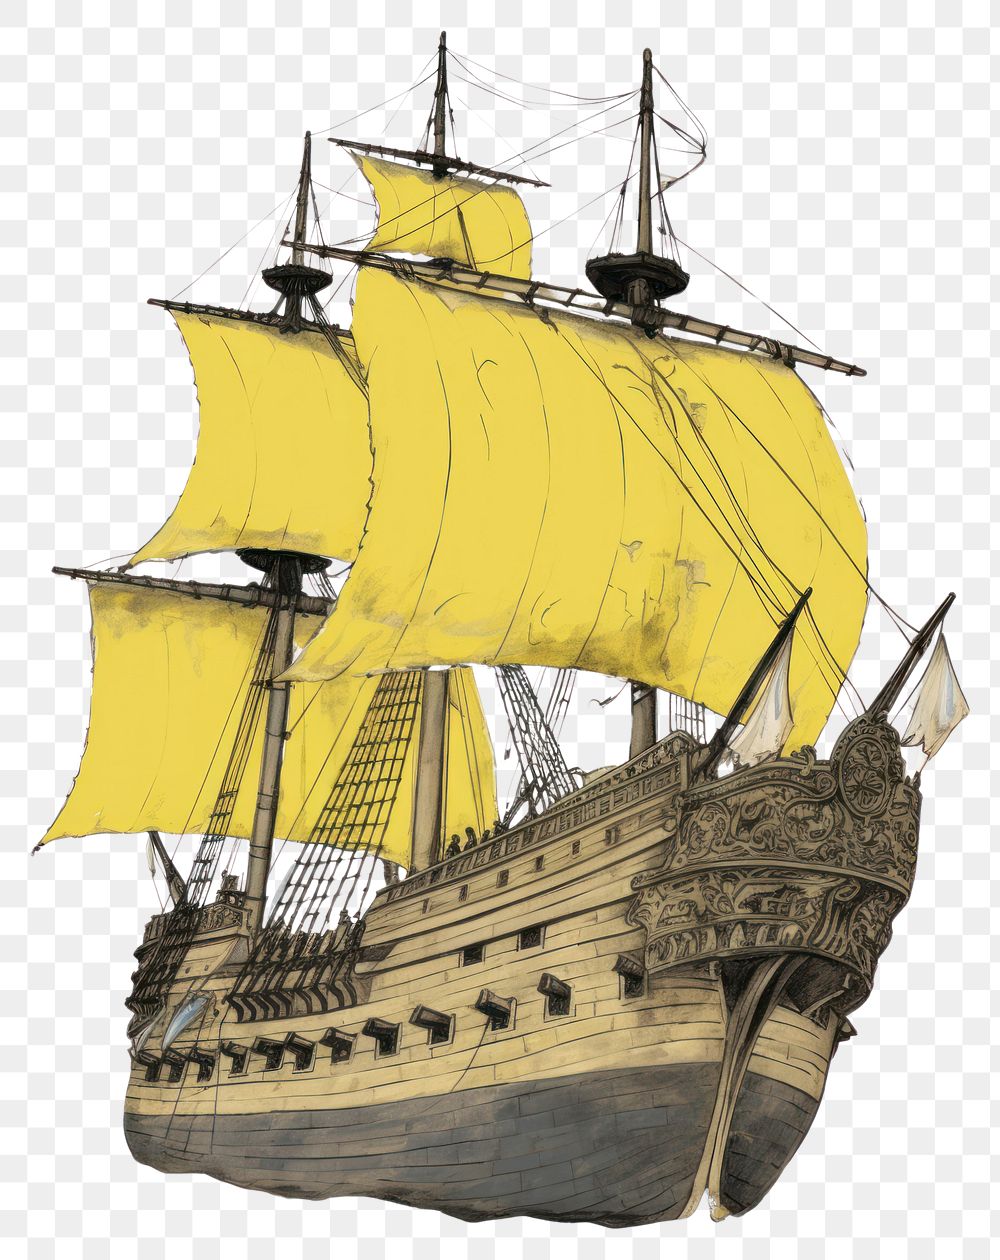 PNG Illustration of a ship yellow watercraft sailboat vehicle.